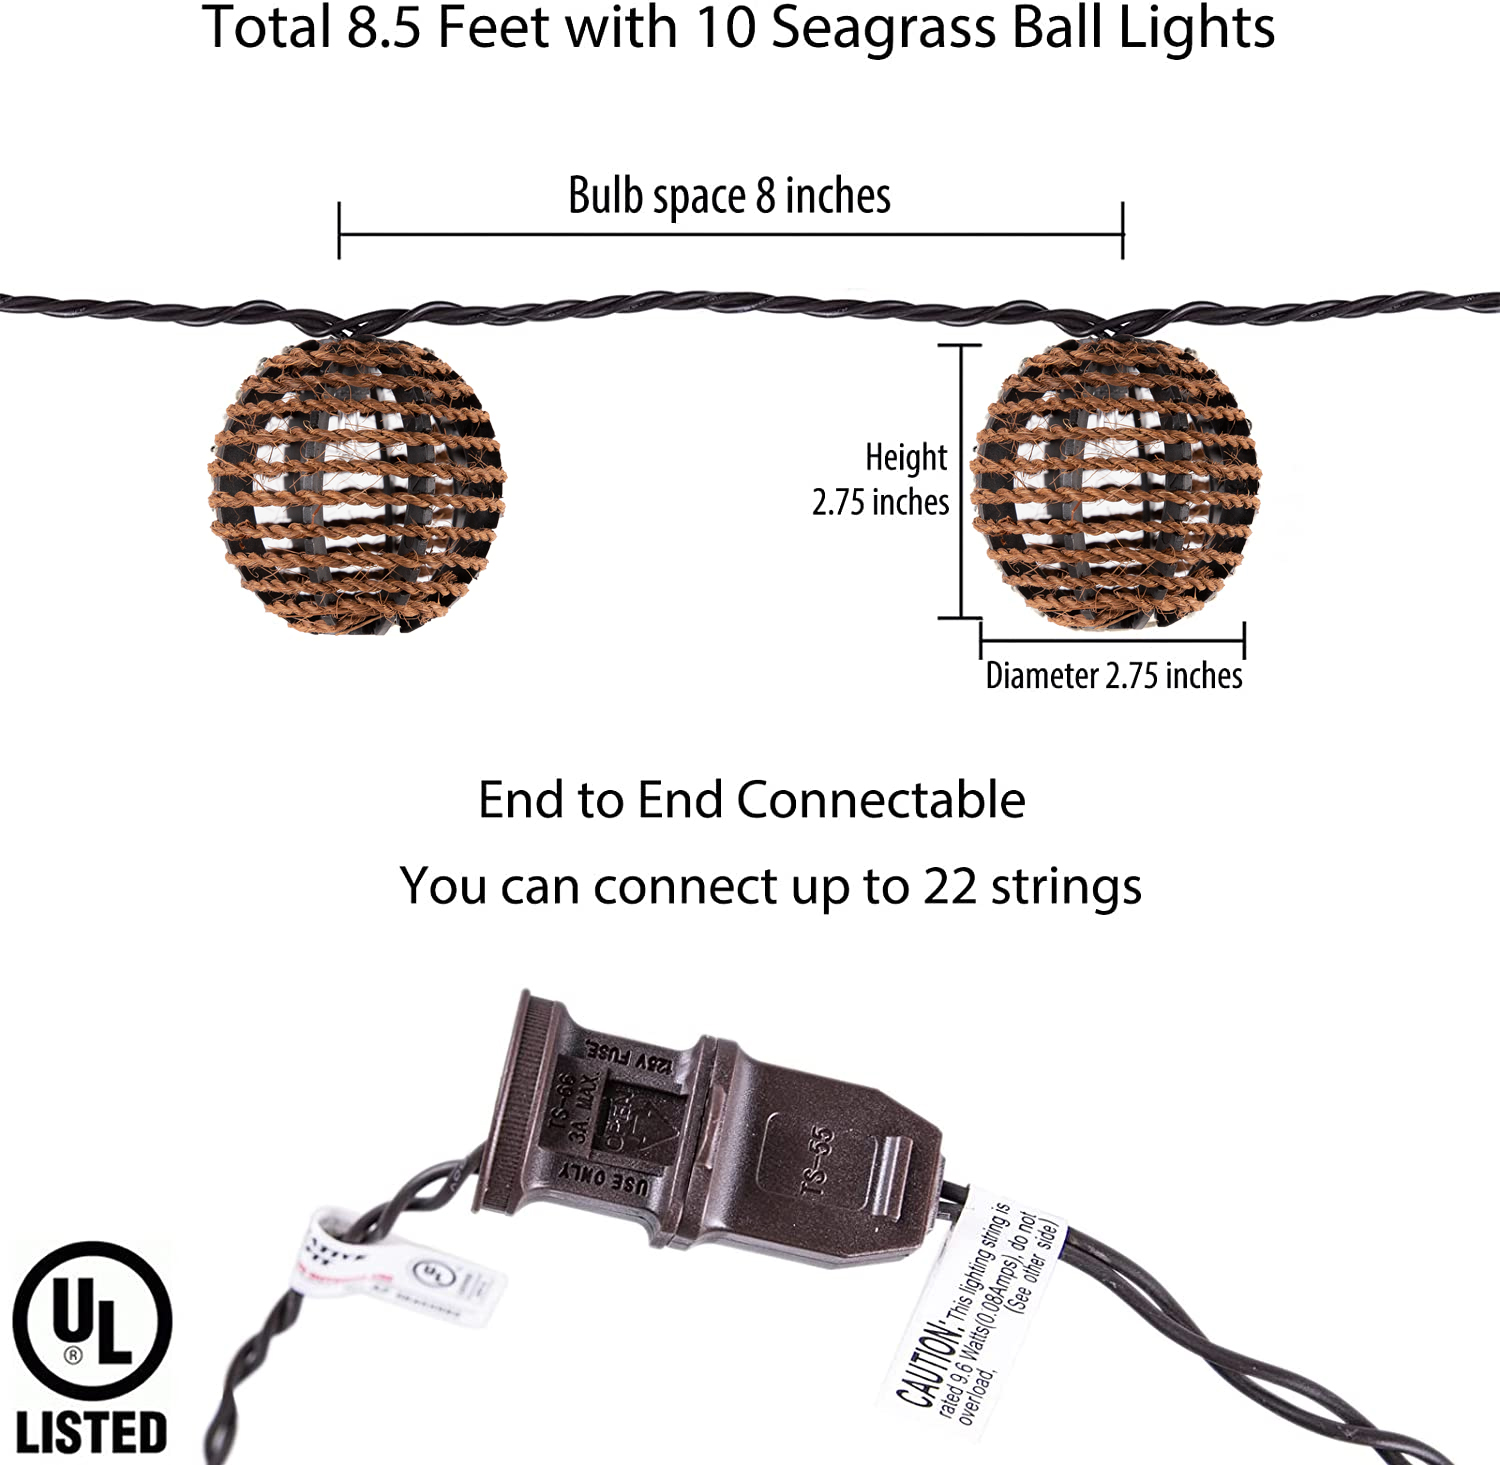 UL listed rattan ball string light